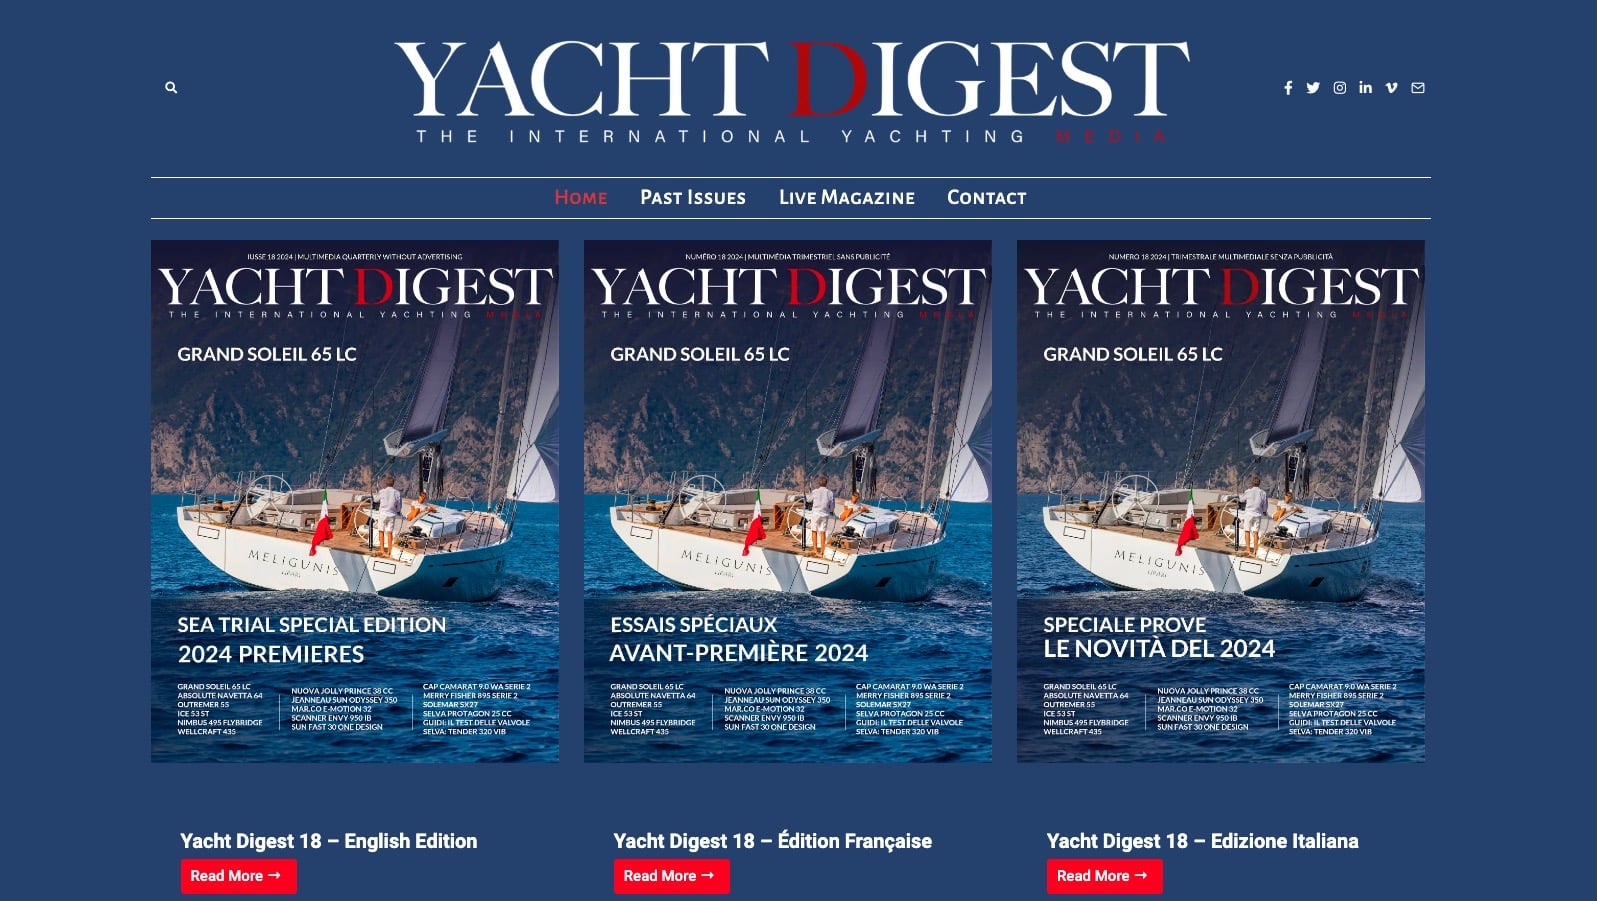 A Yacht Digest 18 já está on-line, com muitos testes marítimos imperdíveis